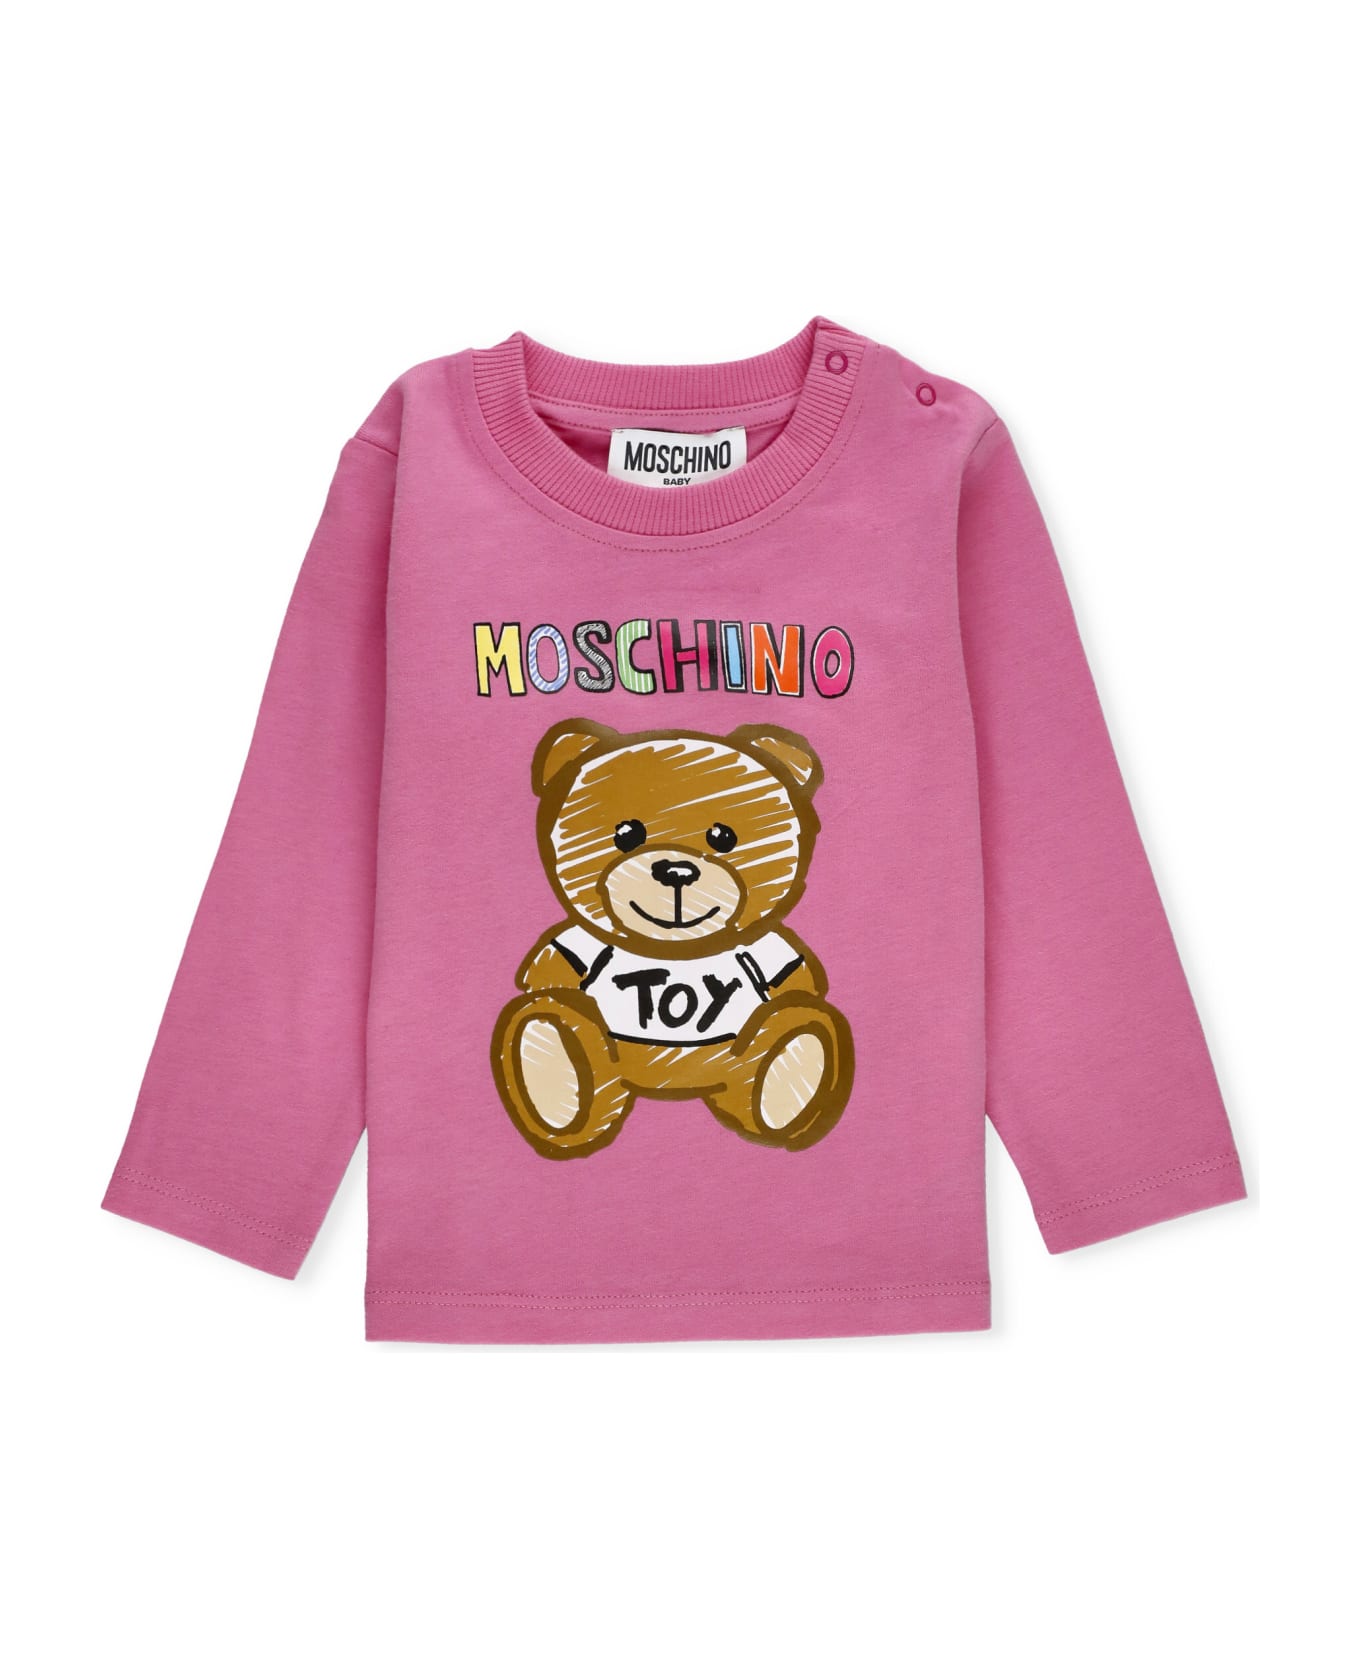 Moschino Teddy Bear T-shirt - Pink